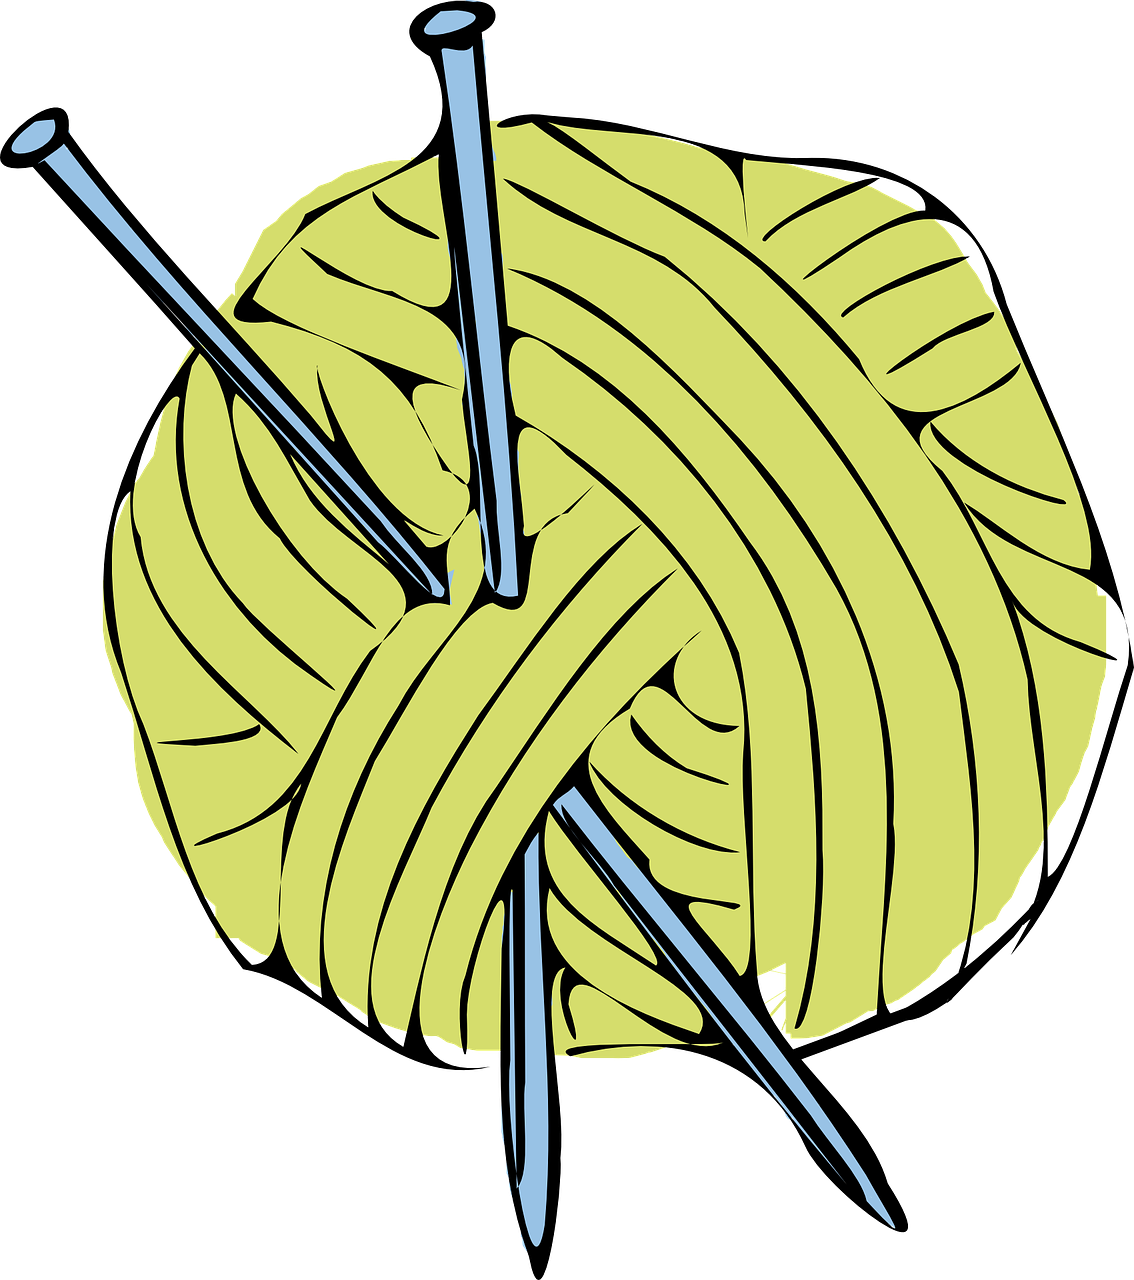 Yellow Yarn Ball With Knitting Needles